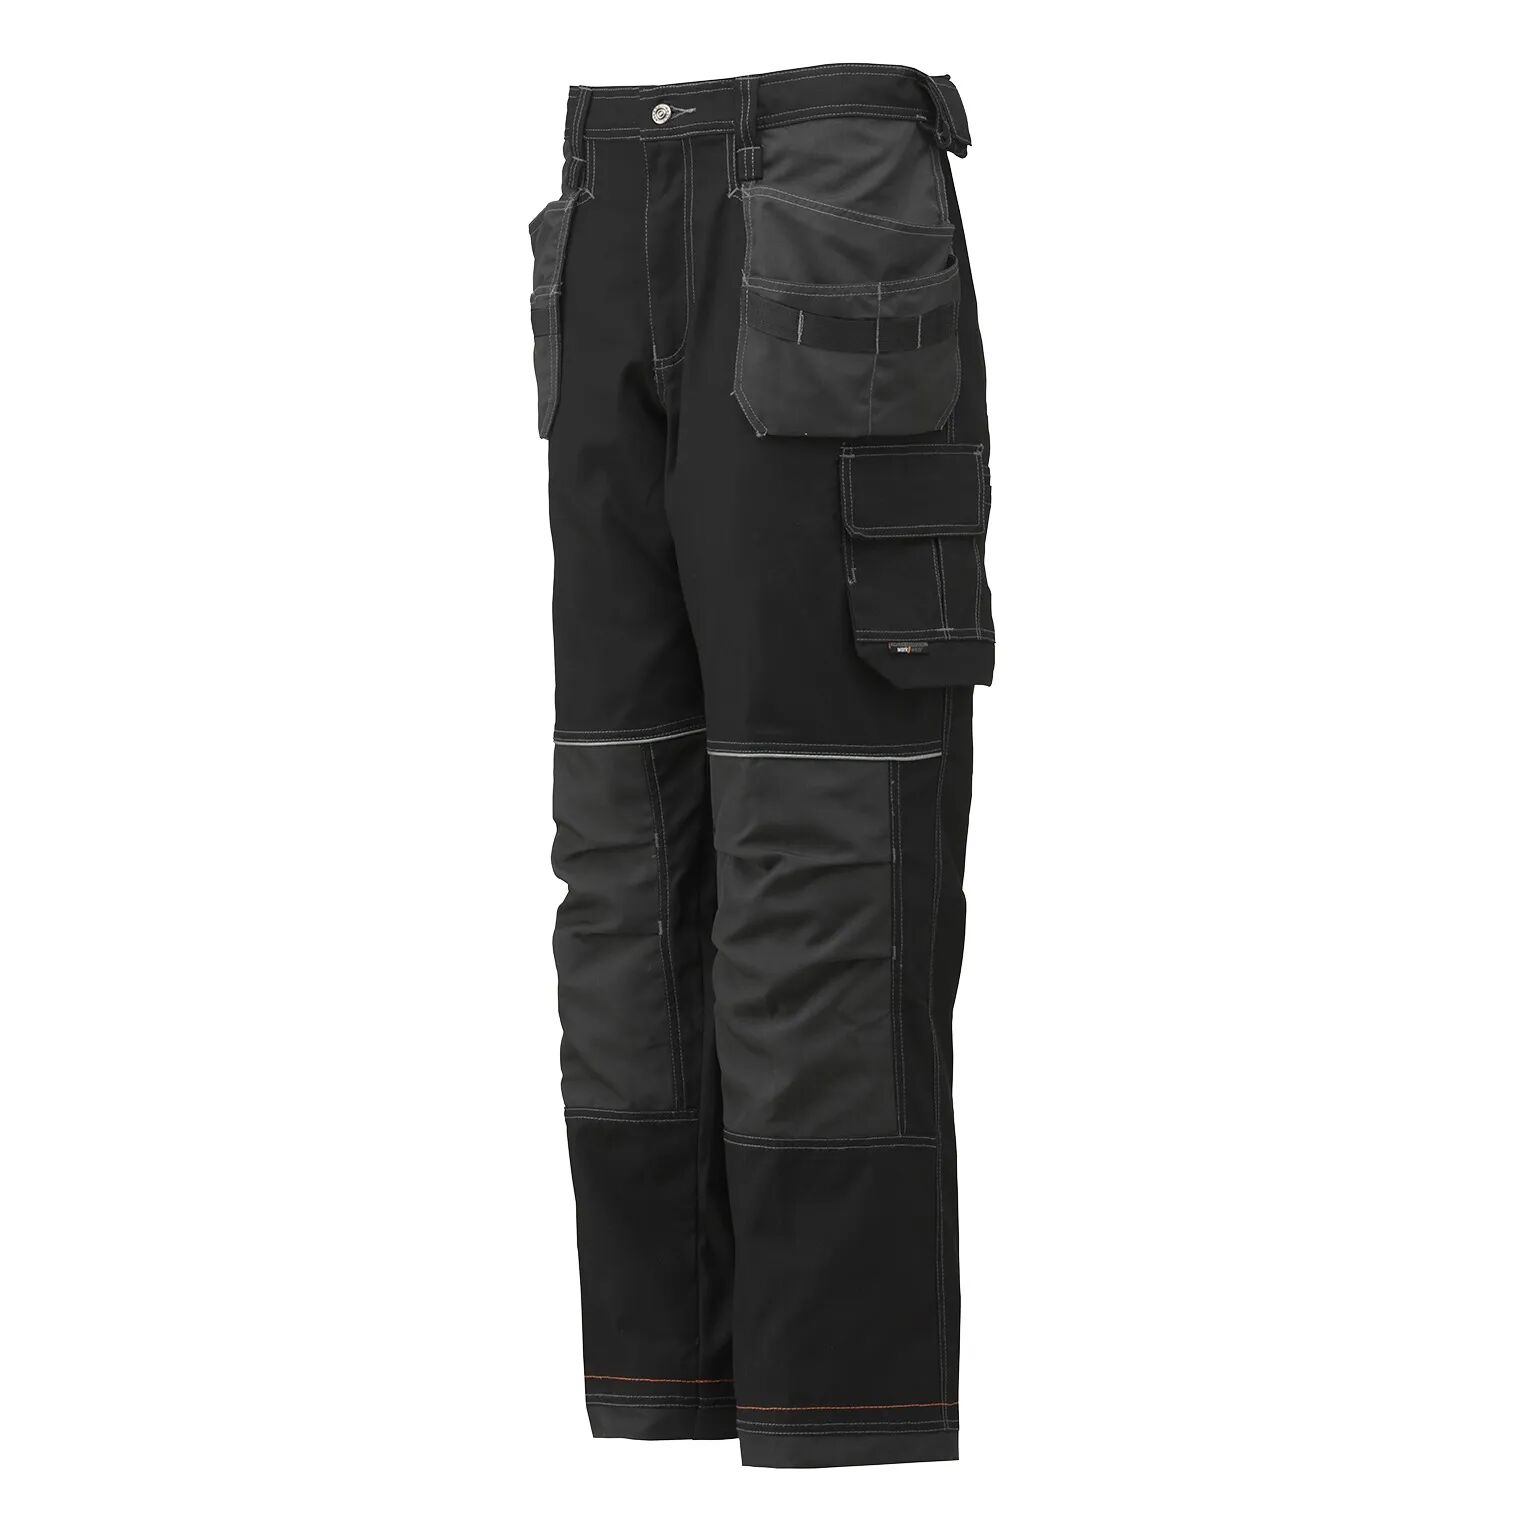 HH Workwear Helly Hansen WorkwearChelsea Durable Reflective Construction Pants Black 34/30